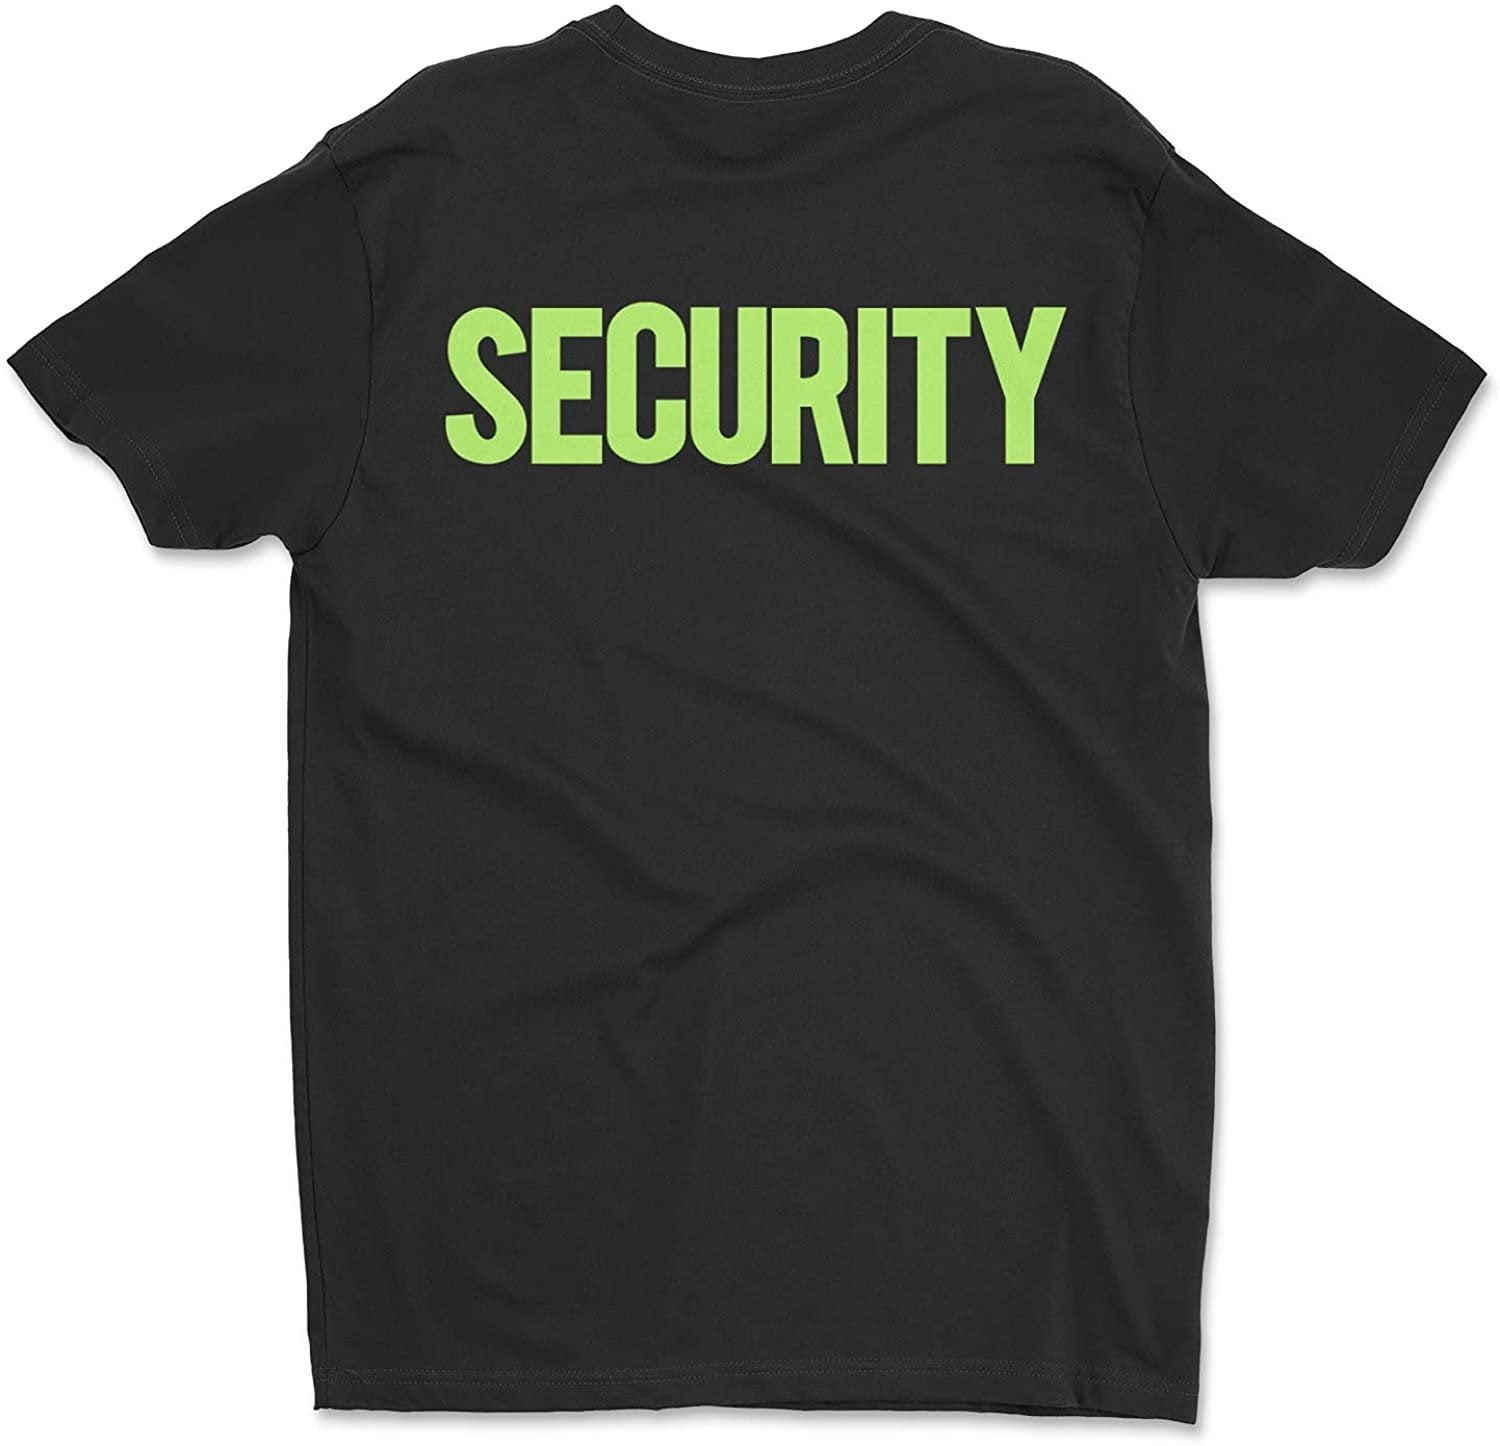 Men's Security T-Shirt (Premium Ringspun Cotton, Black/Neon)